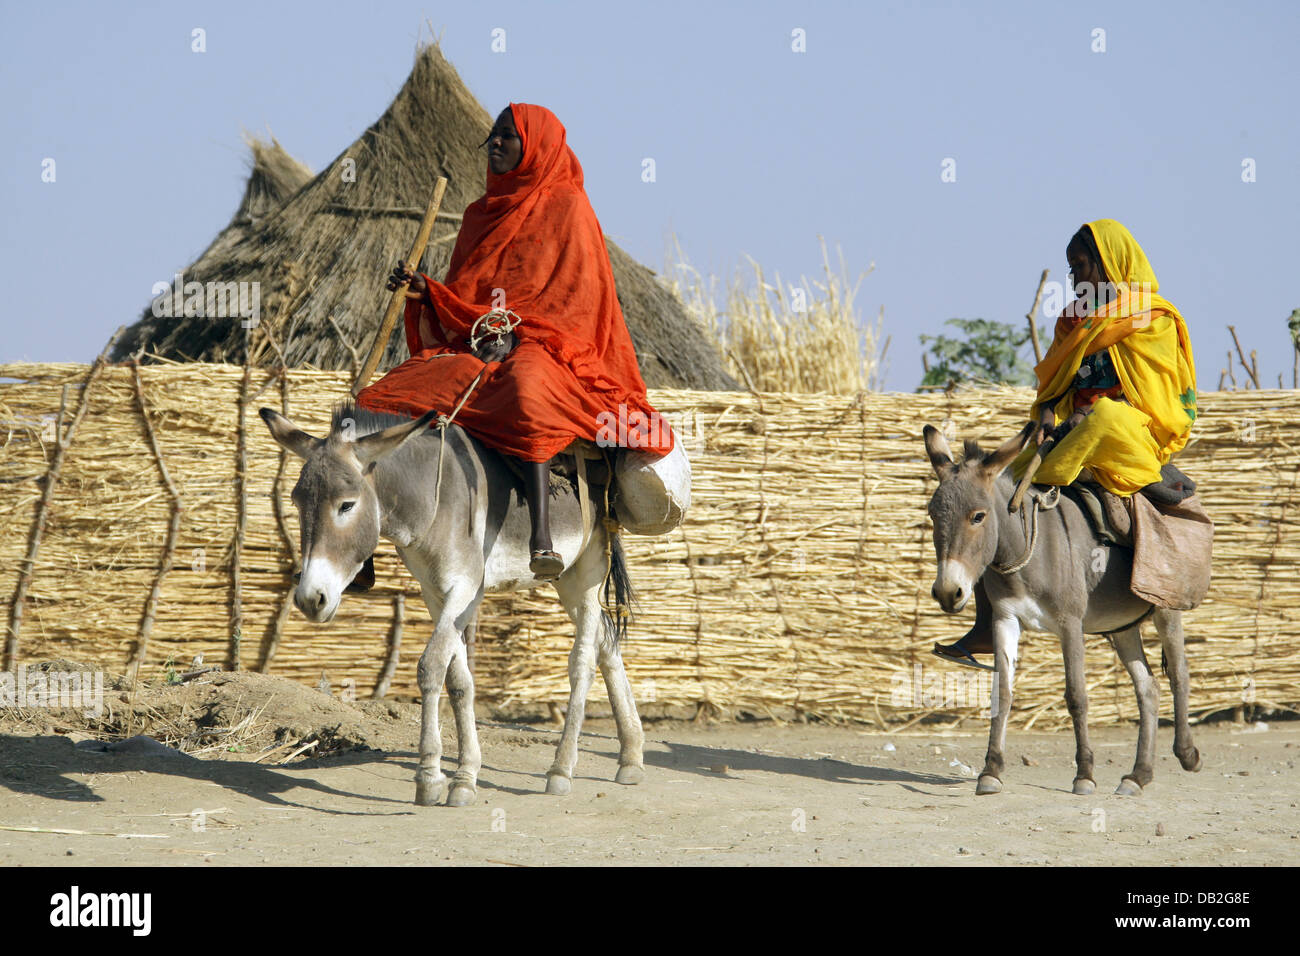 Two female riders sit on their donkeys in Mukjar in Western Dafur, Sudan, 11 December 2007. Photo: Peter Steffen Stock Photo